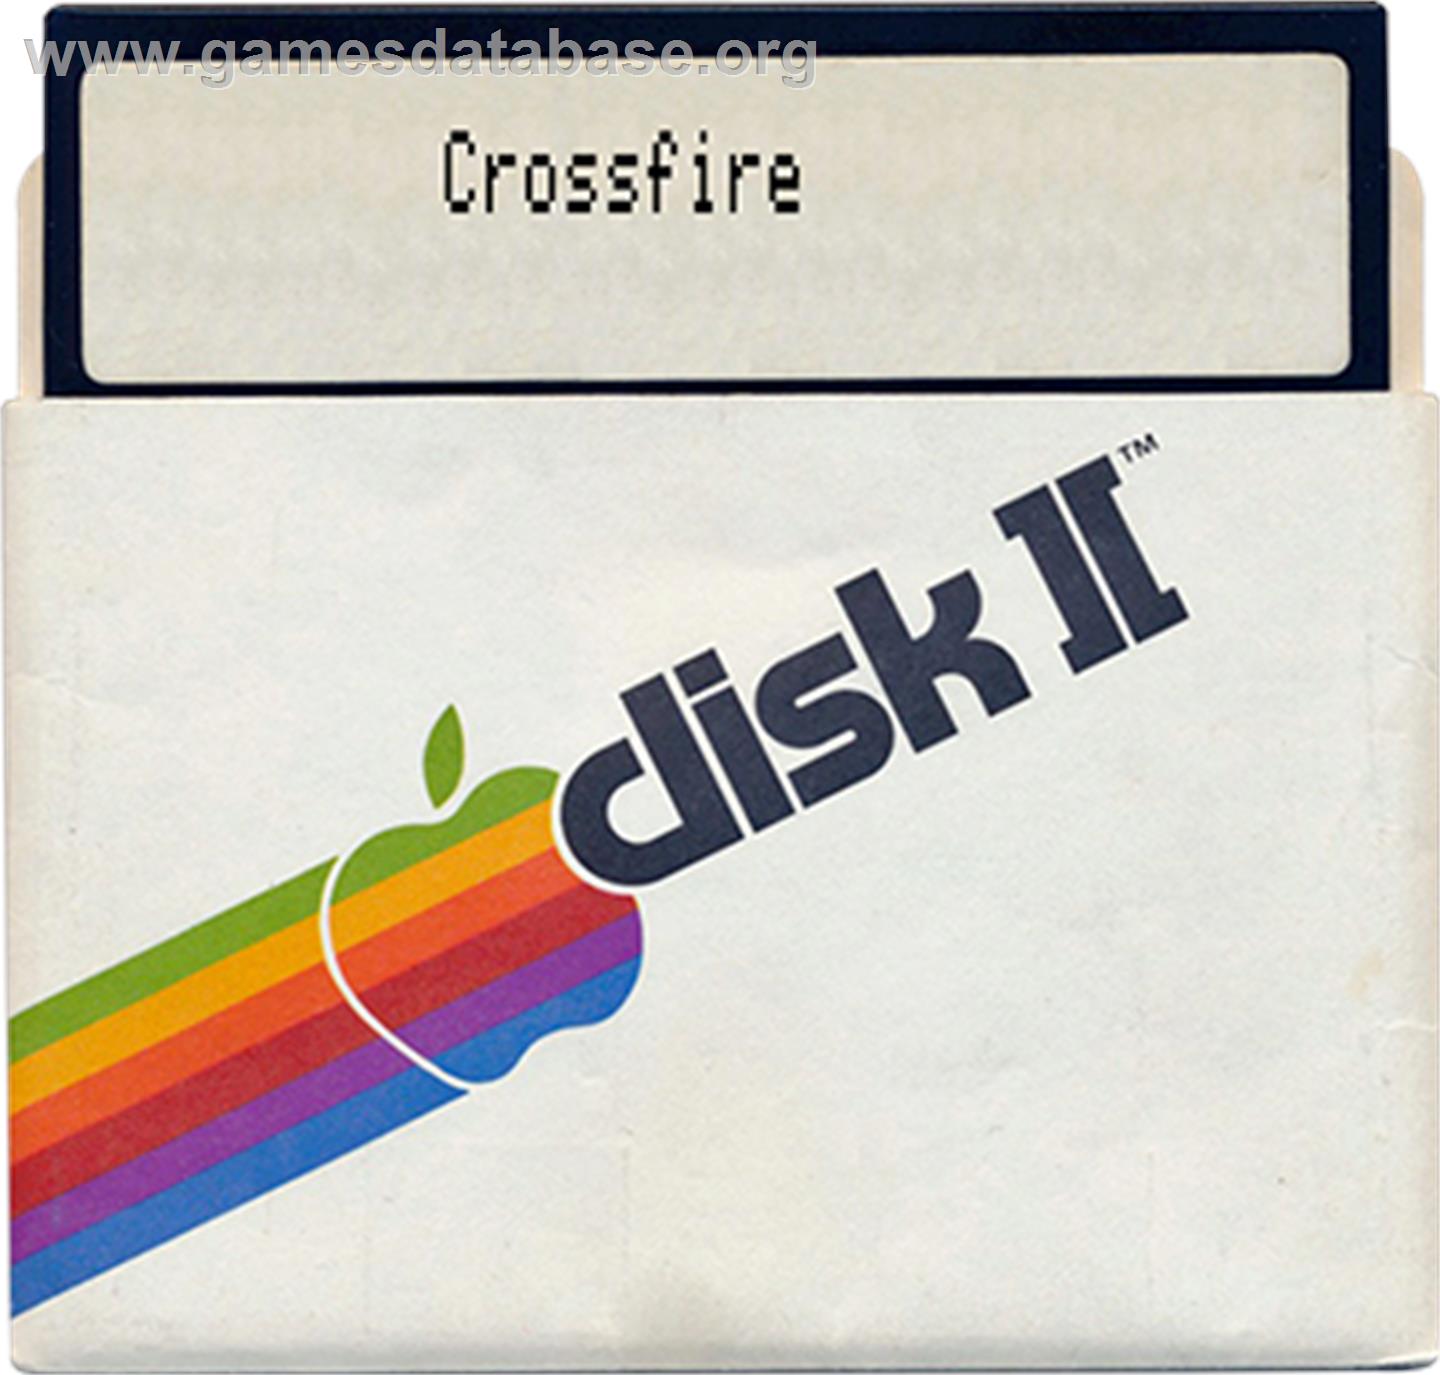 Crossfire - Apple II - Artwork - Disc